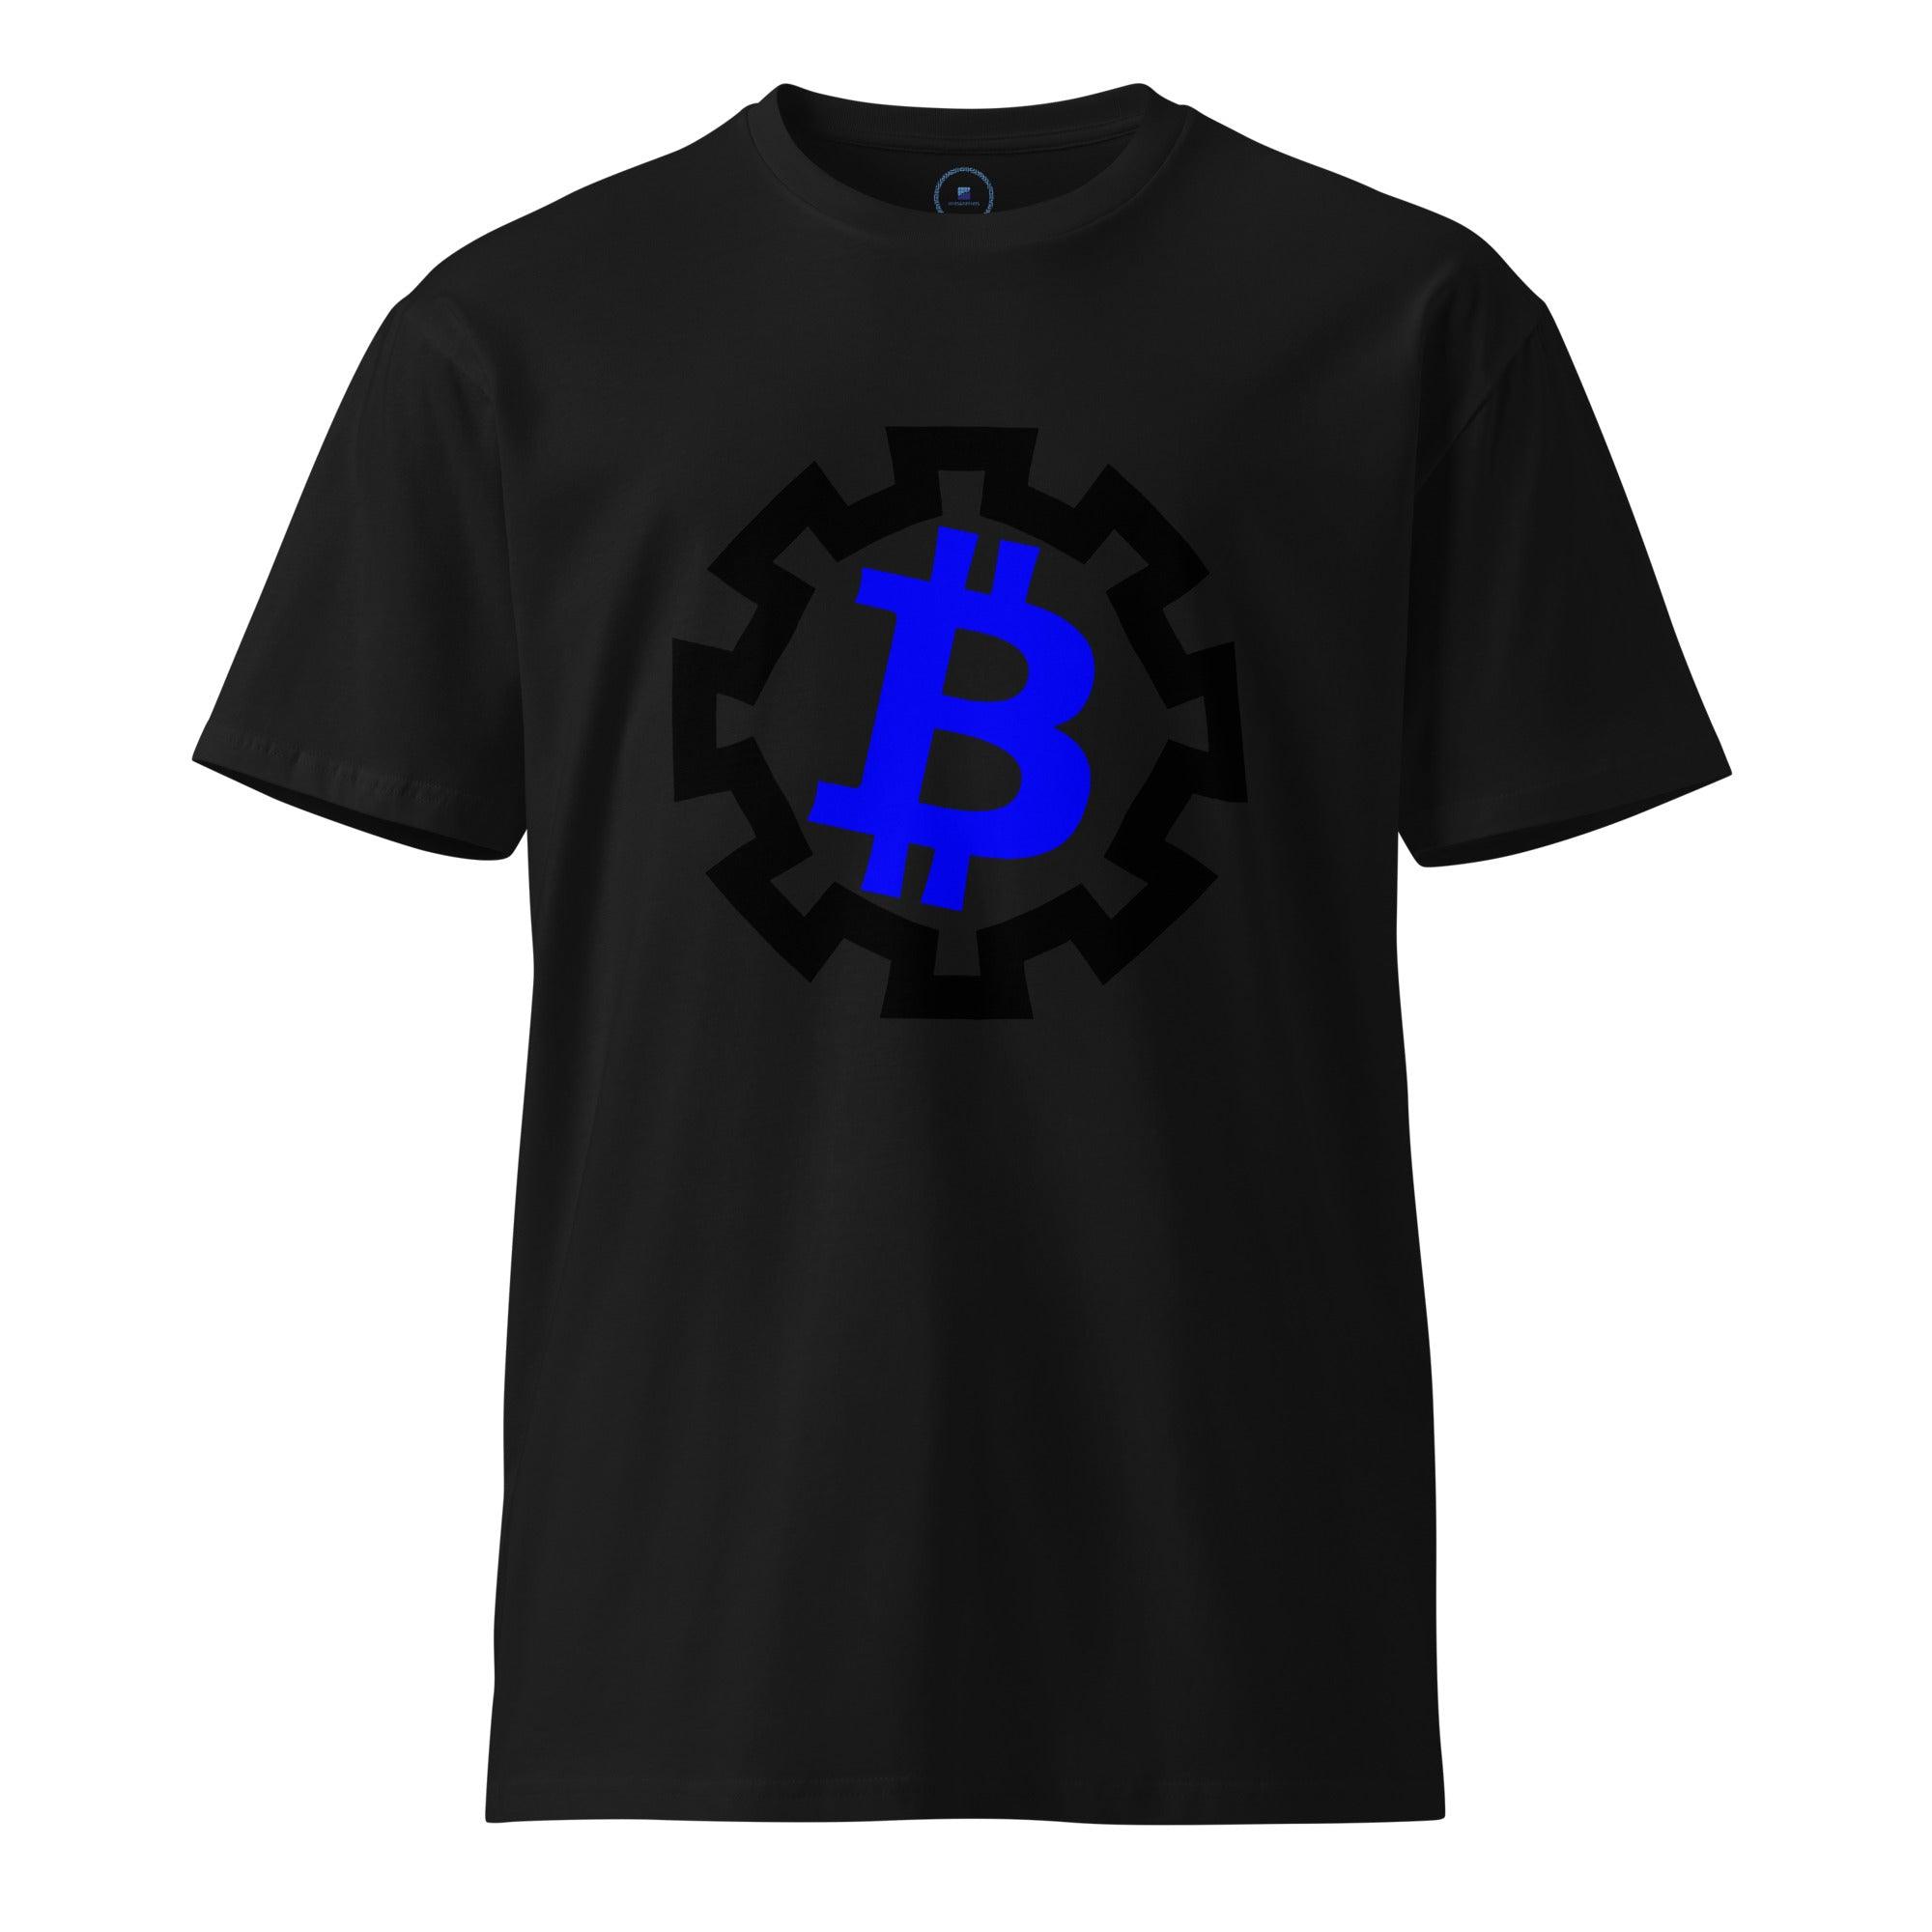 Bitcoin Gear Wheel T-Shirt - InvestmenTees